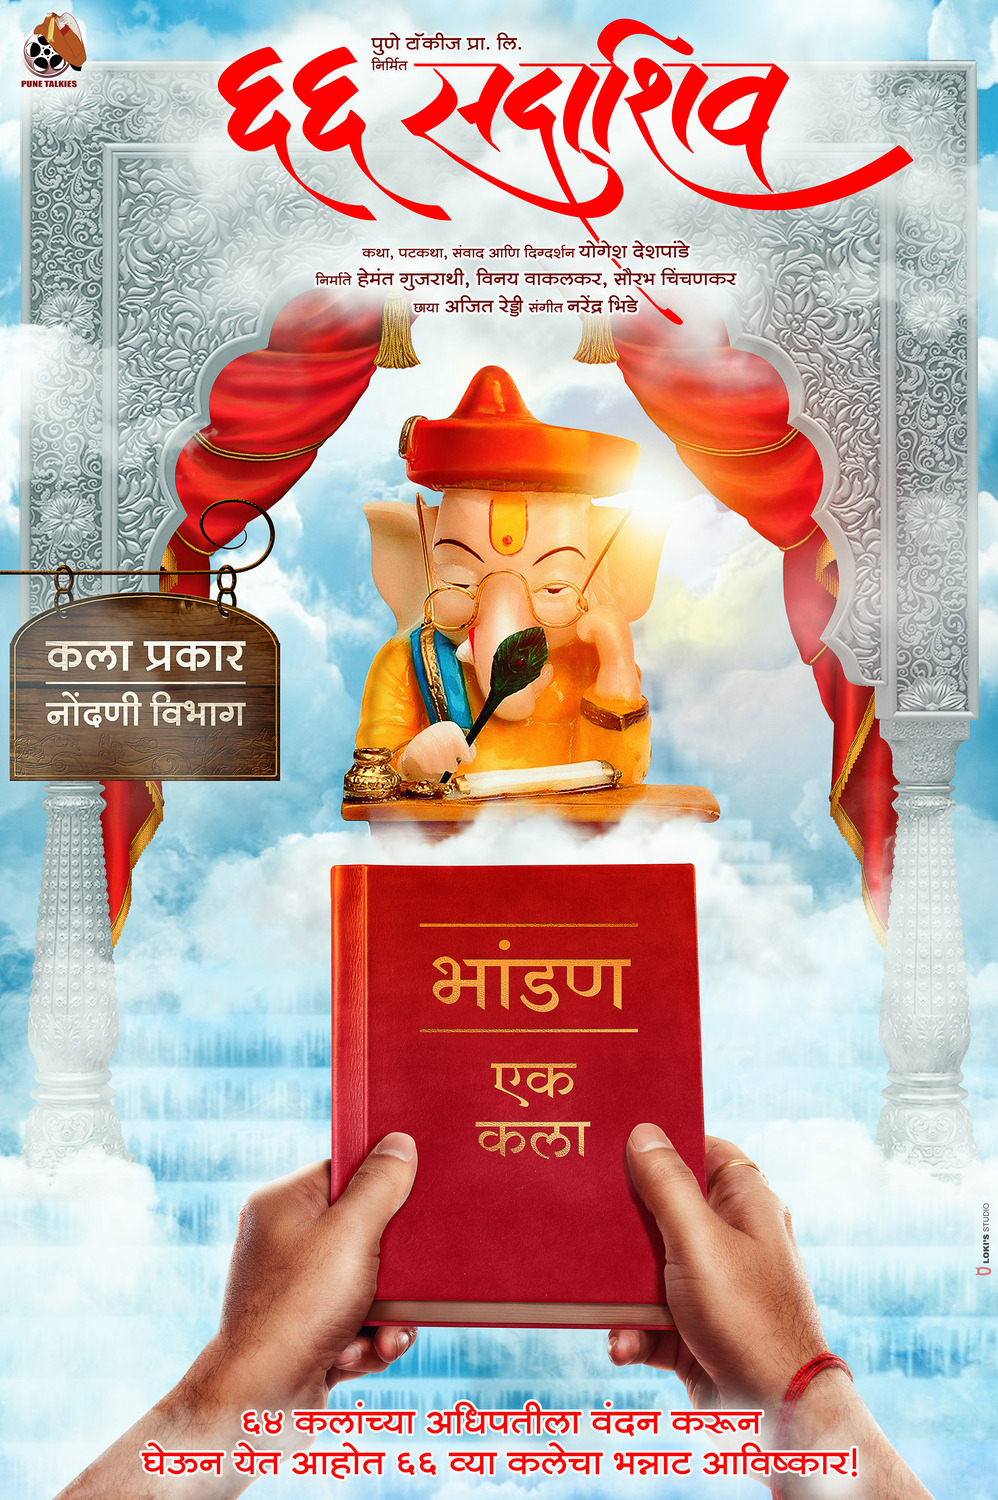 Extra Large Movie Poster Image for 66 Sadashiv (#3 of 8)